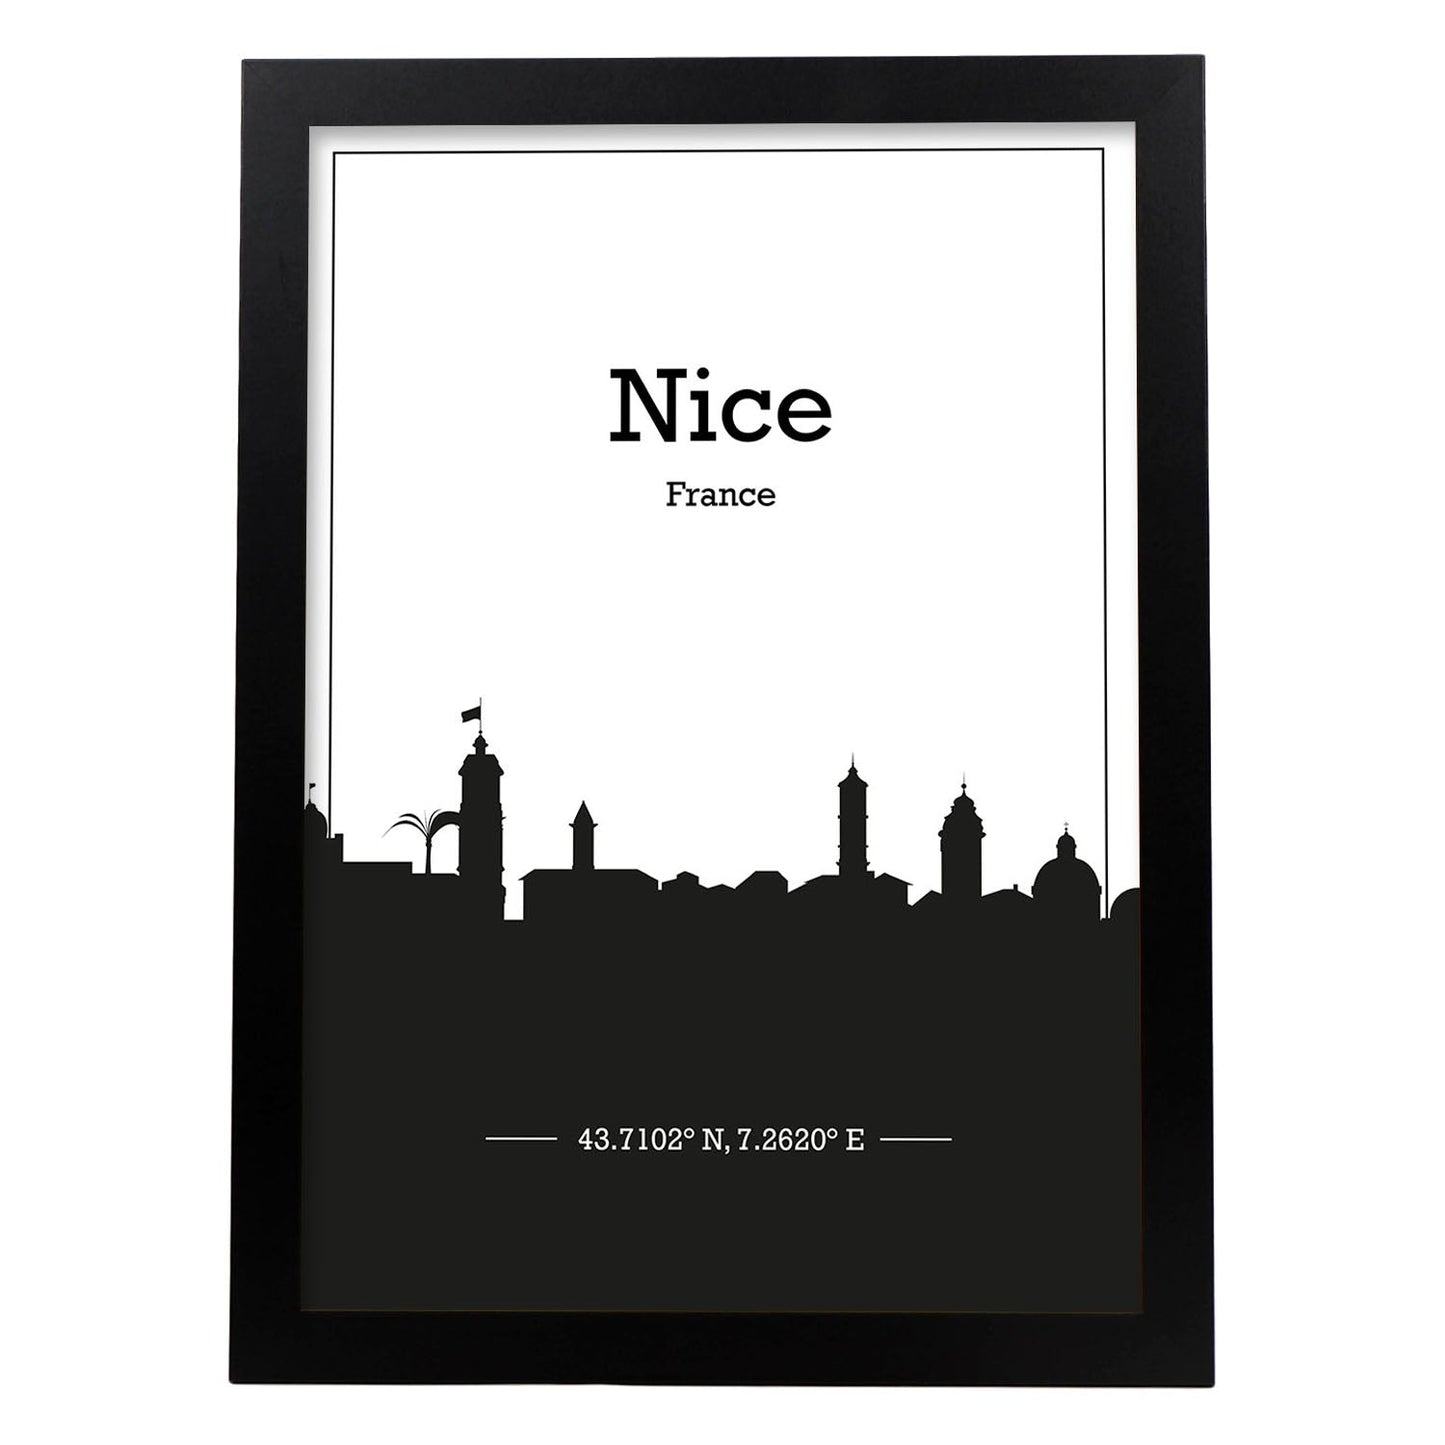 Poster con mapa de Nice - Francia. Láminas con Skyline de ciudades de Francia con sombra negra.-Artwork-Nacnic-A3-Marco Negro-Nacnic Estudio SL